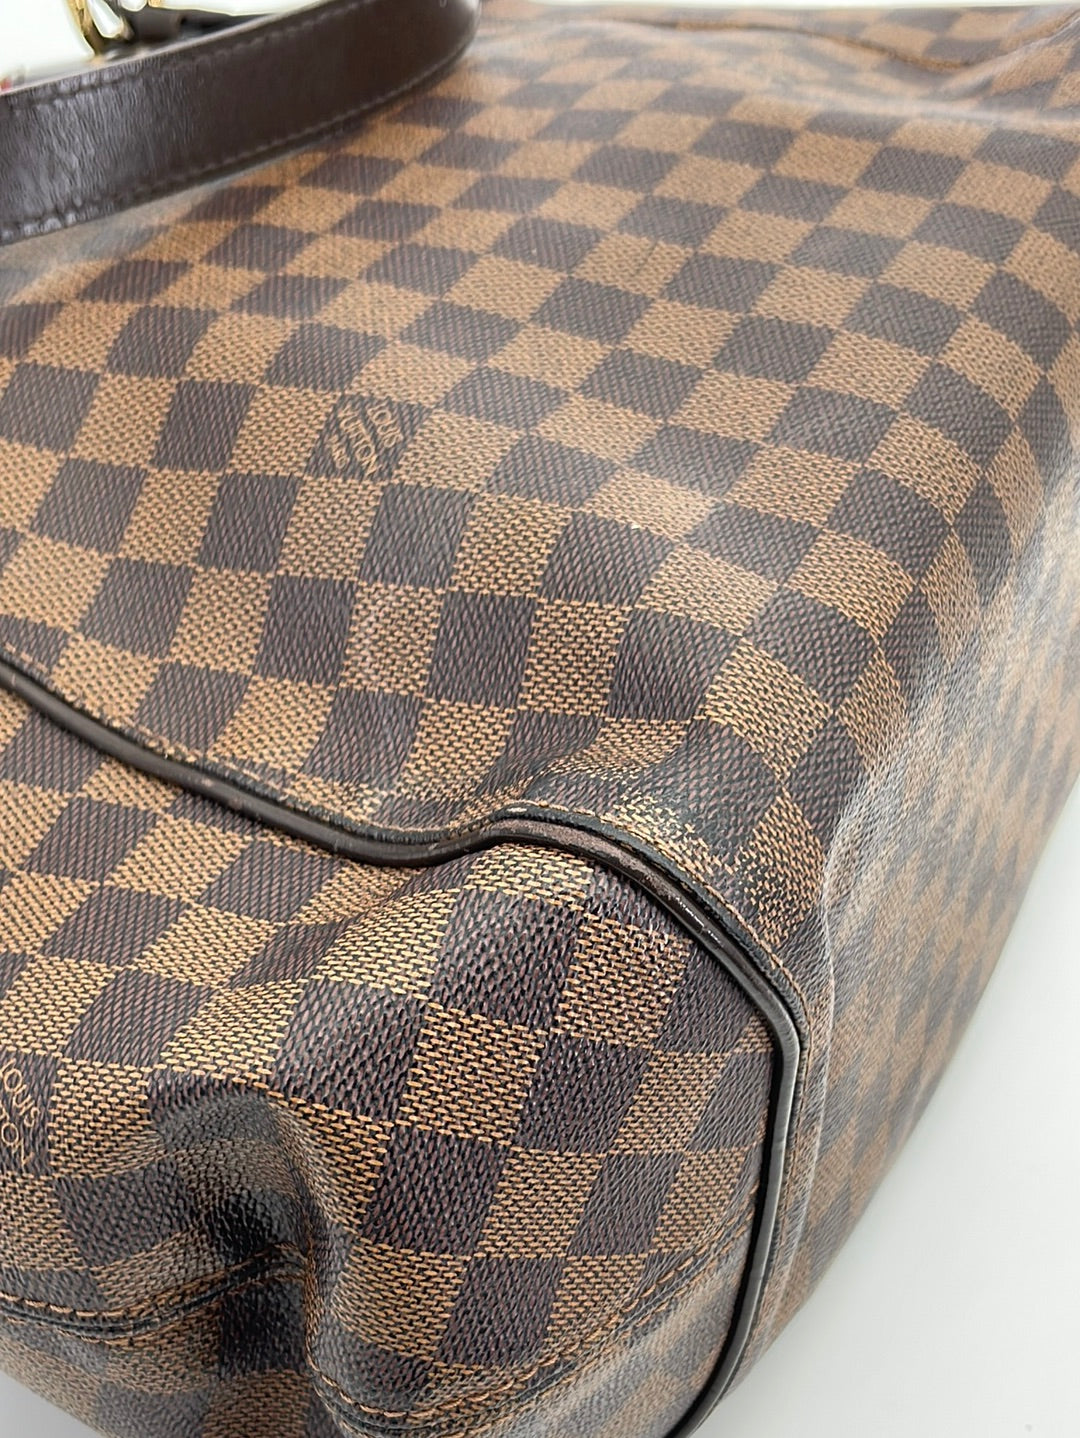 Louis Vuitton Sistina GM Damier Ebene Handbag